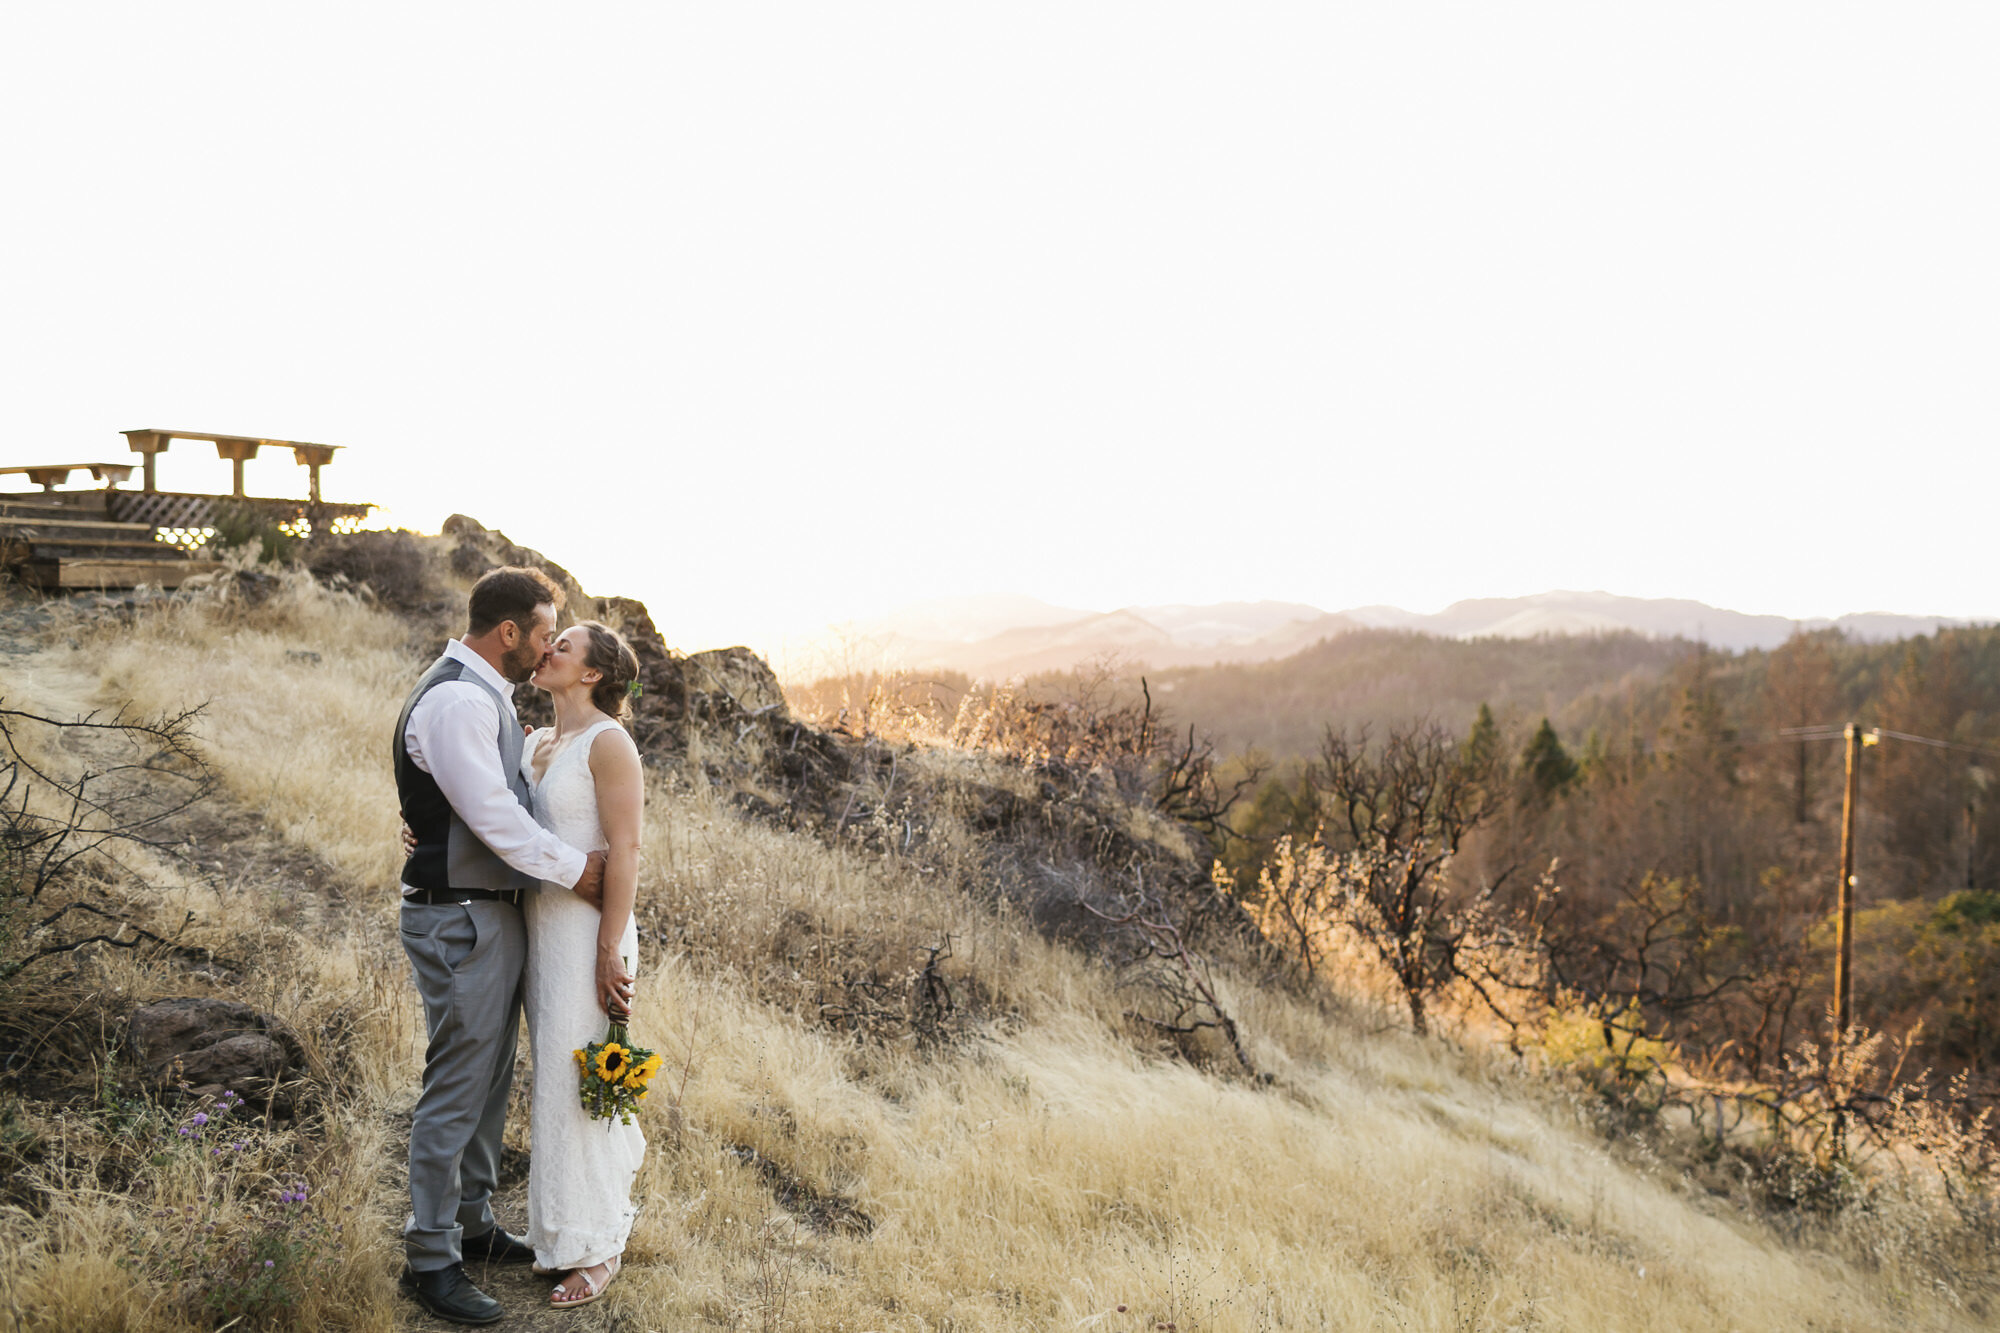 Sunset wedding portraits among wildfire burn damage in Sonoma California